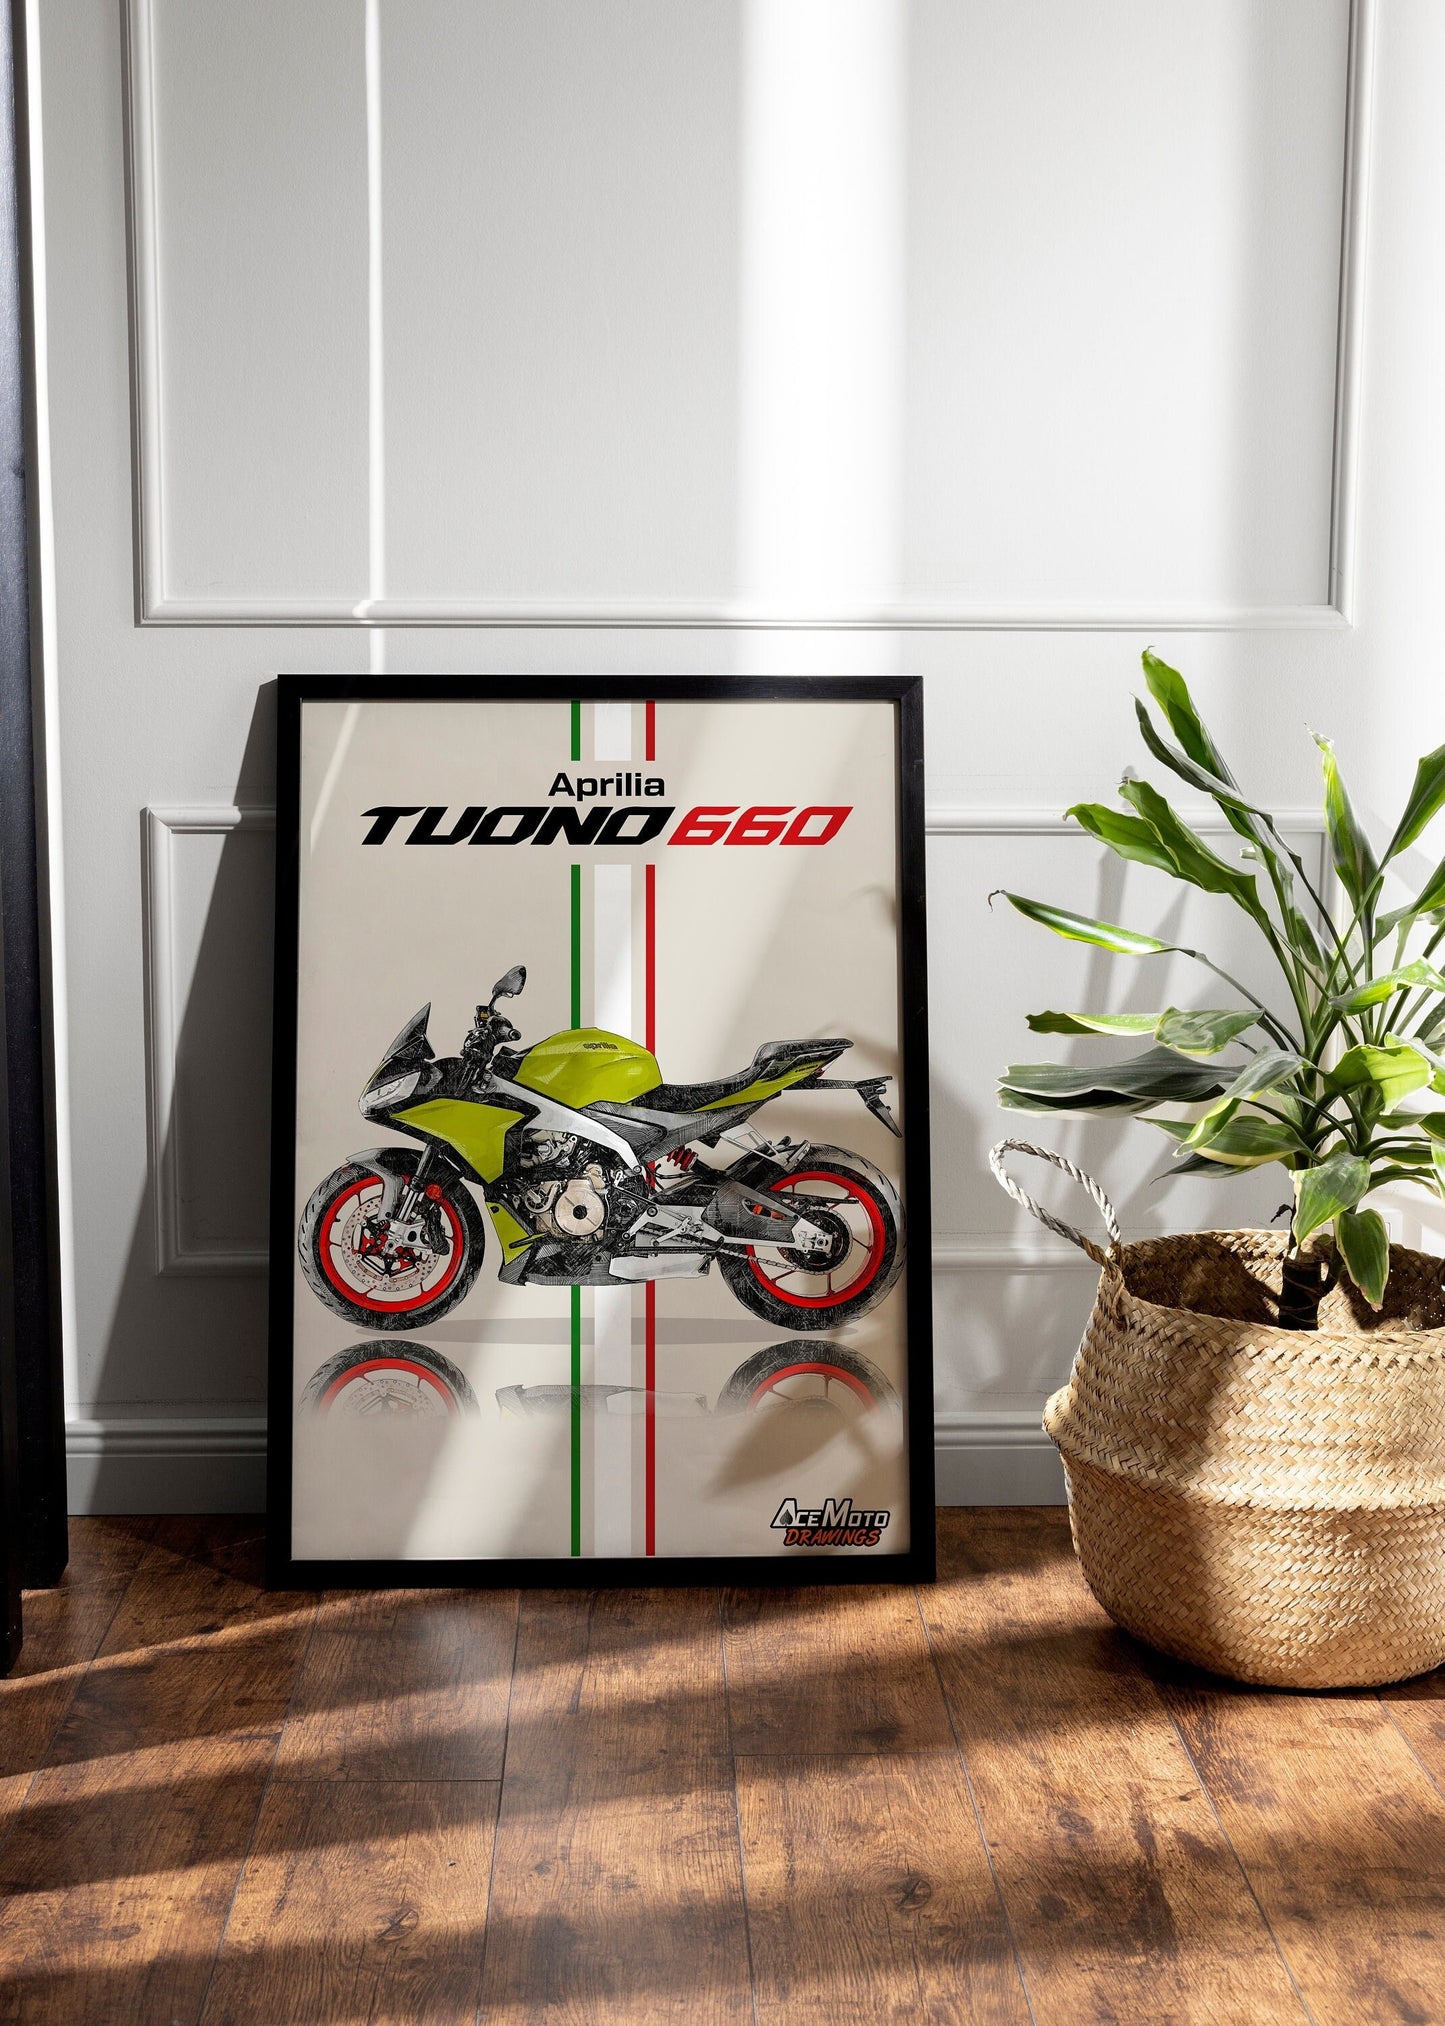 Aprilia Tuono 660 2021 | Motorcycle Poster, Bike Wall Art Decor - Gift for Lovers Aprilia Rider Present Drawing